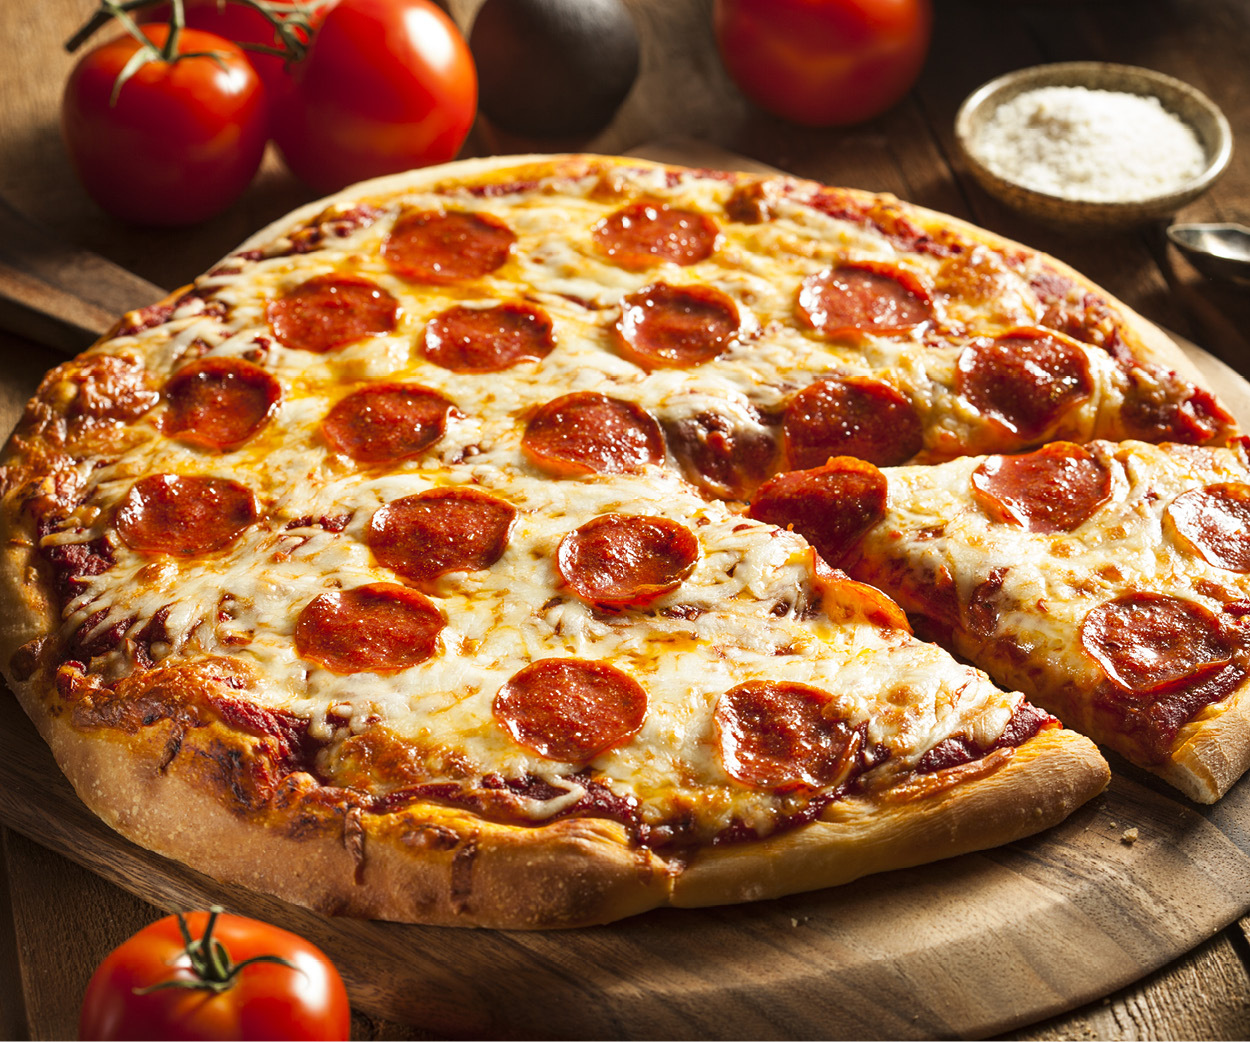 The Pizza Italiaonaoo Delicious